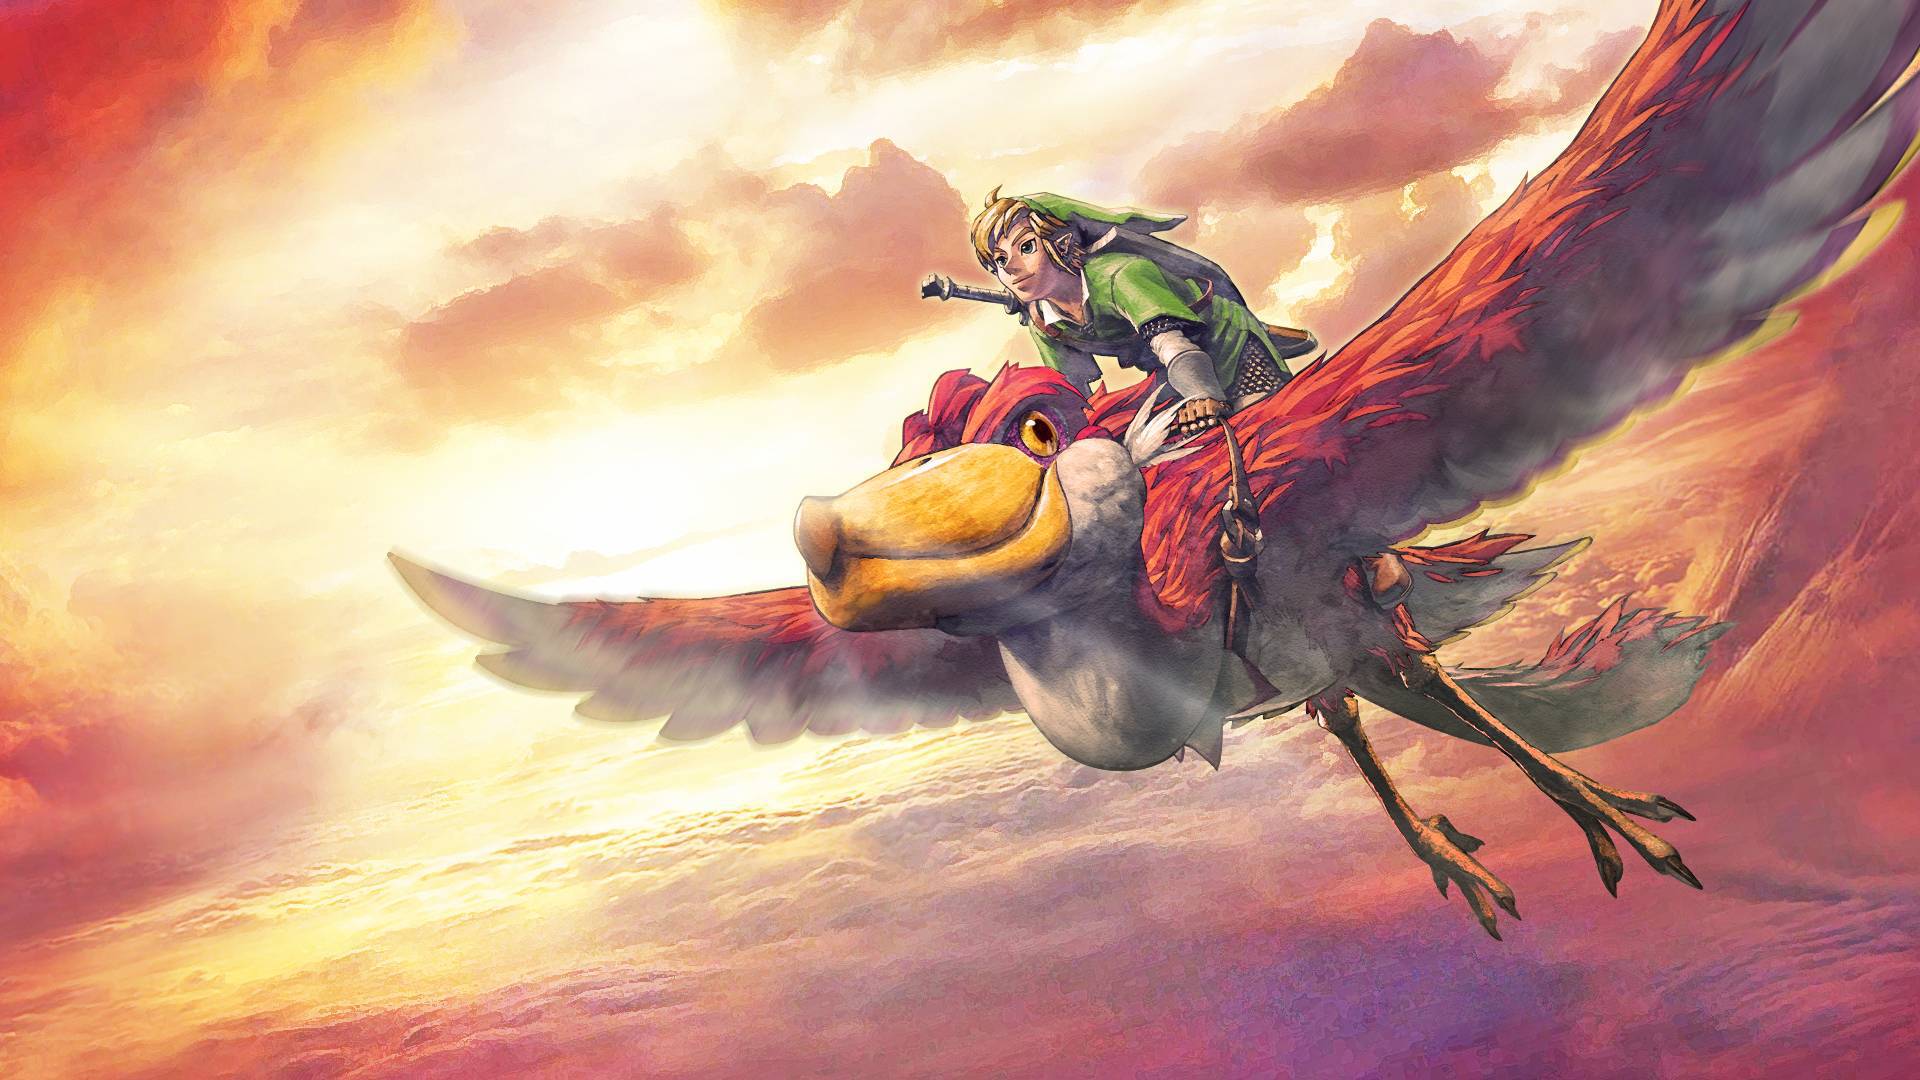 The Legend Of Zelda Wallpaper Background, Link, Pictures Of Link